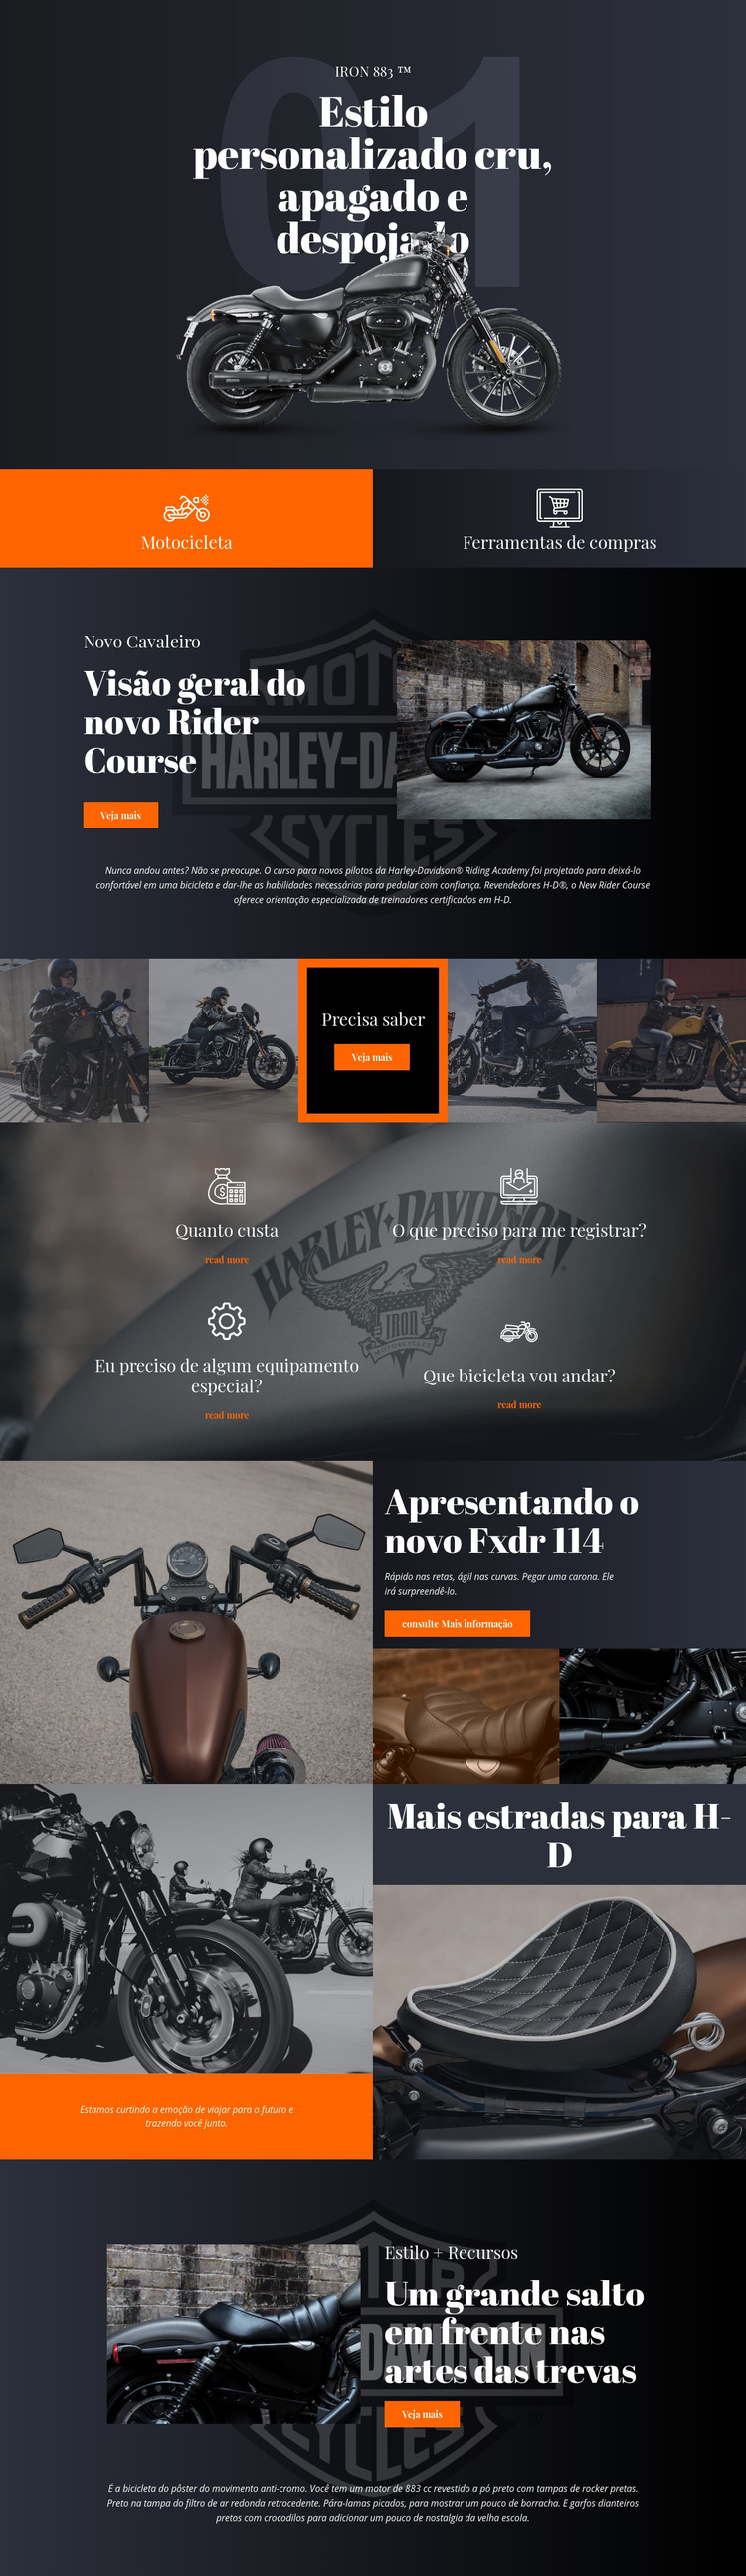 Harley Davidson Modelo de site